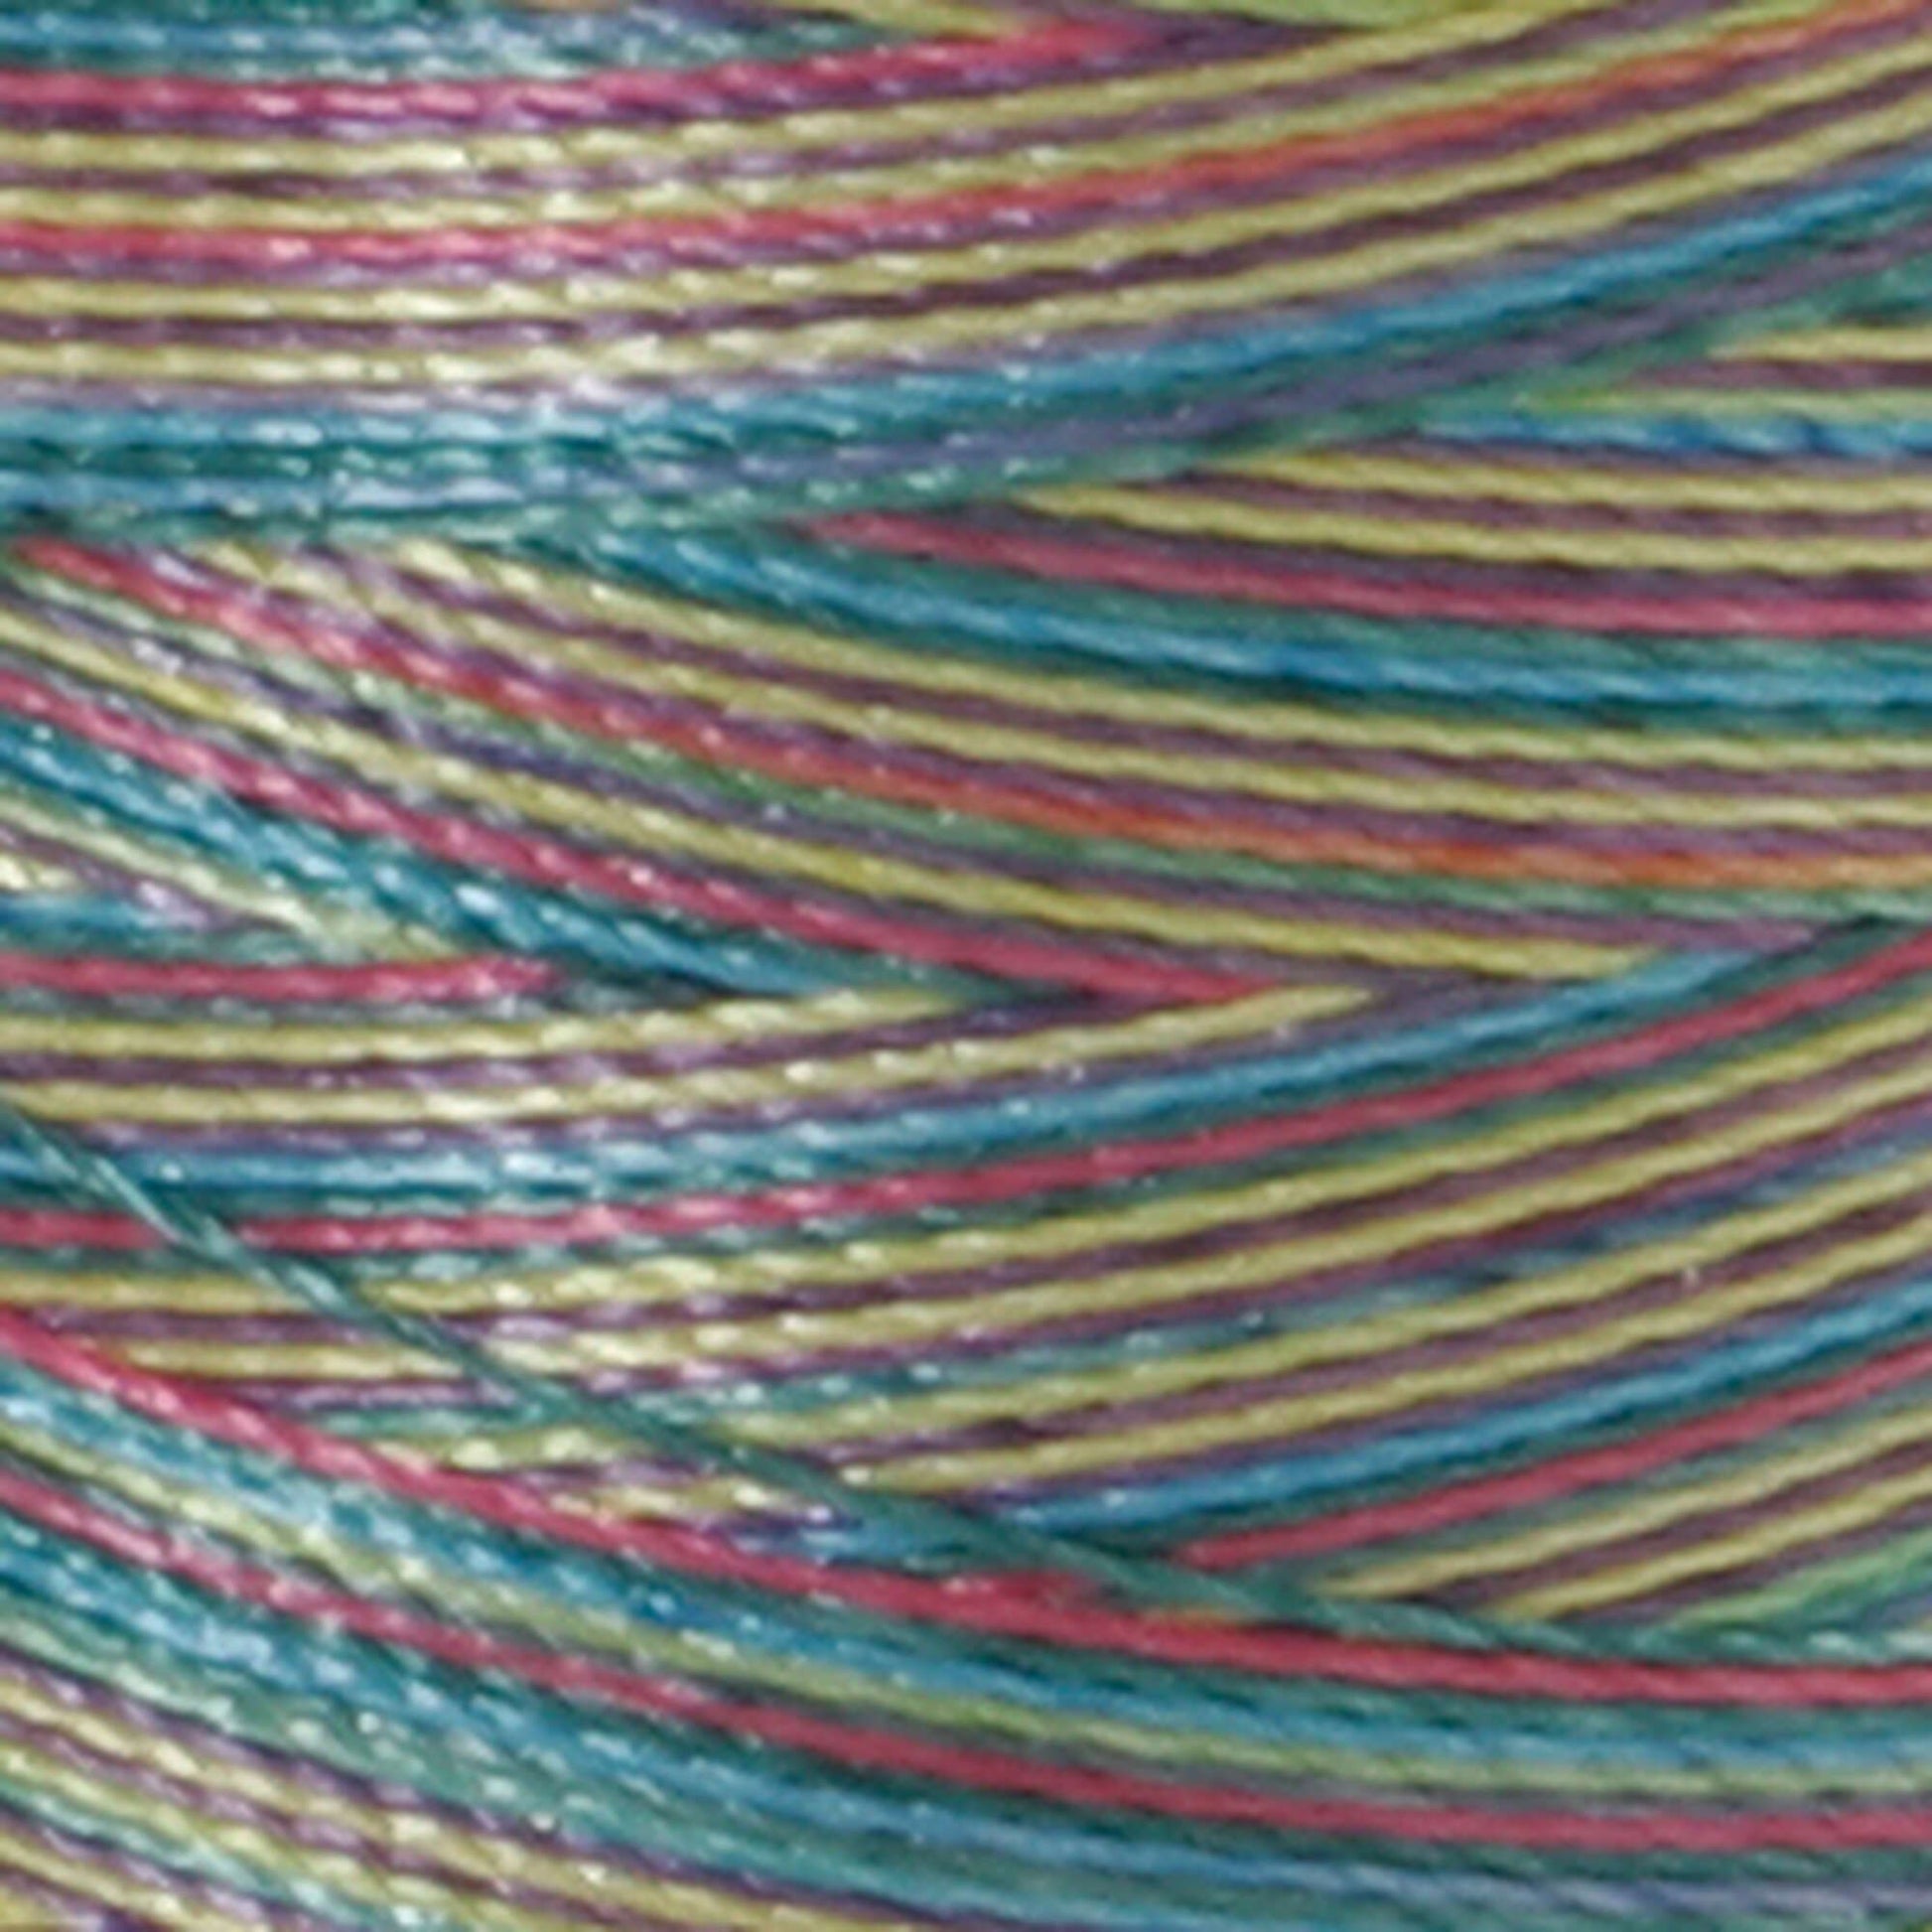 Coats & Clark Machine Embroidery Thread (1100 Yards)